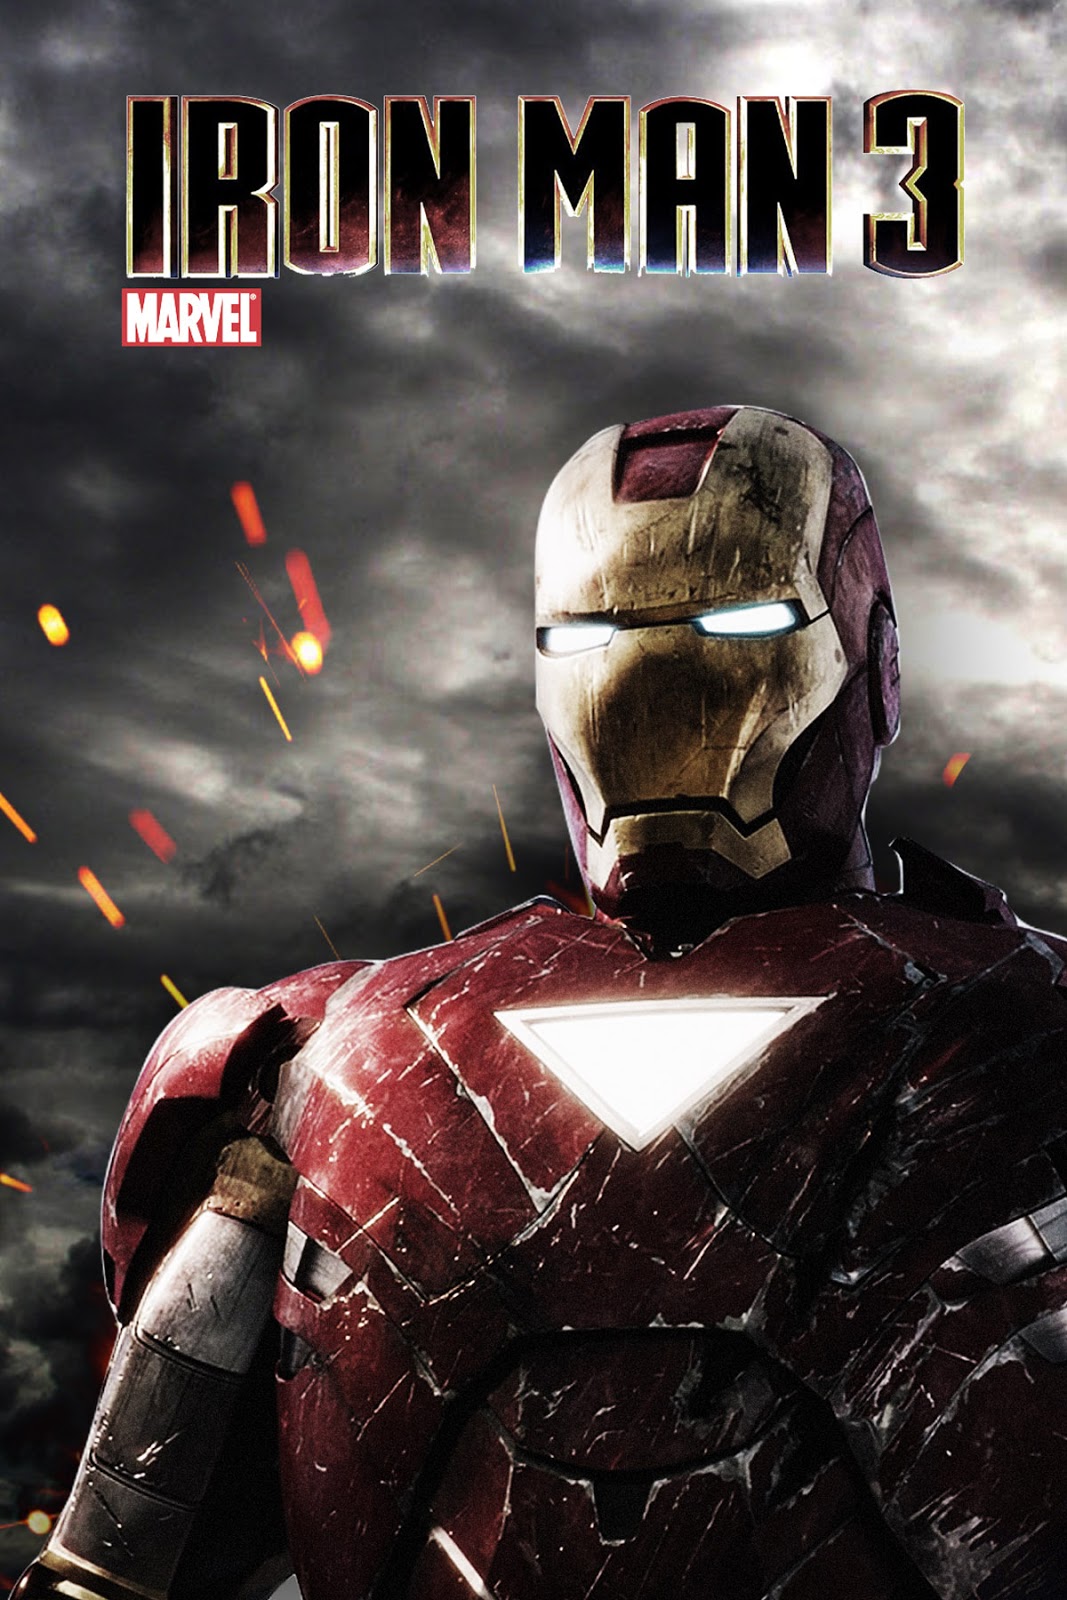 Iron Man HD Wallpaper 1080p High Definition